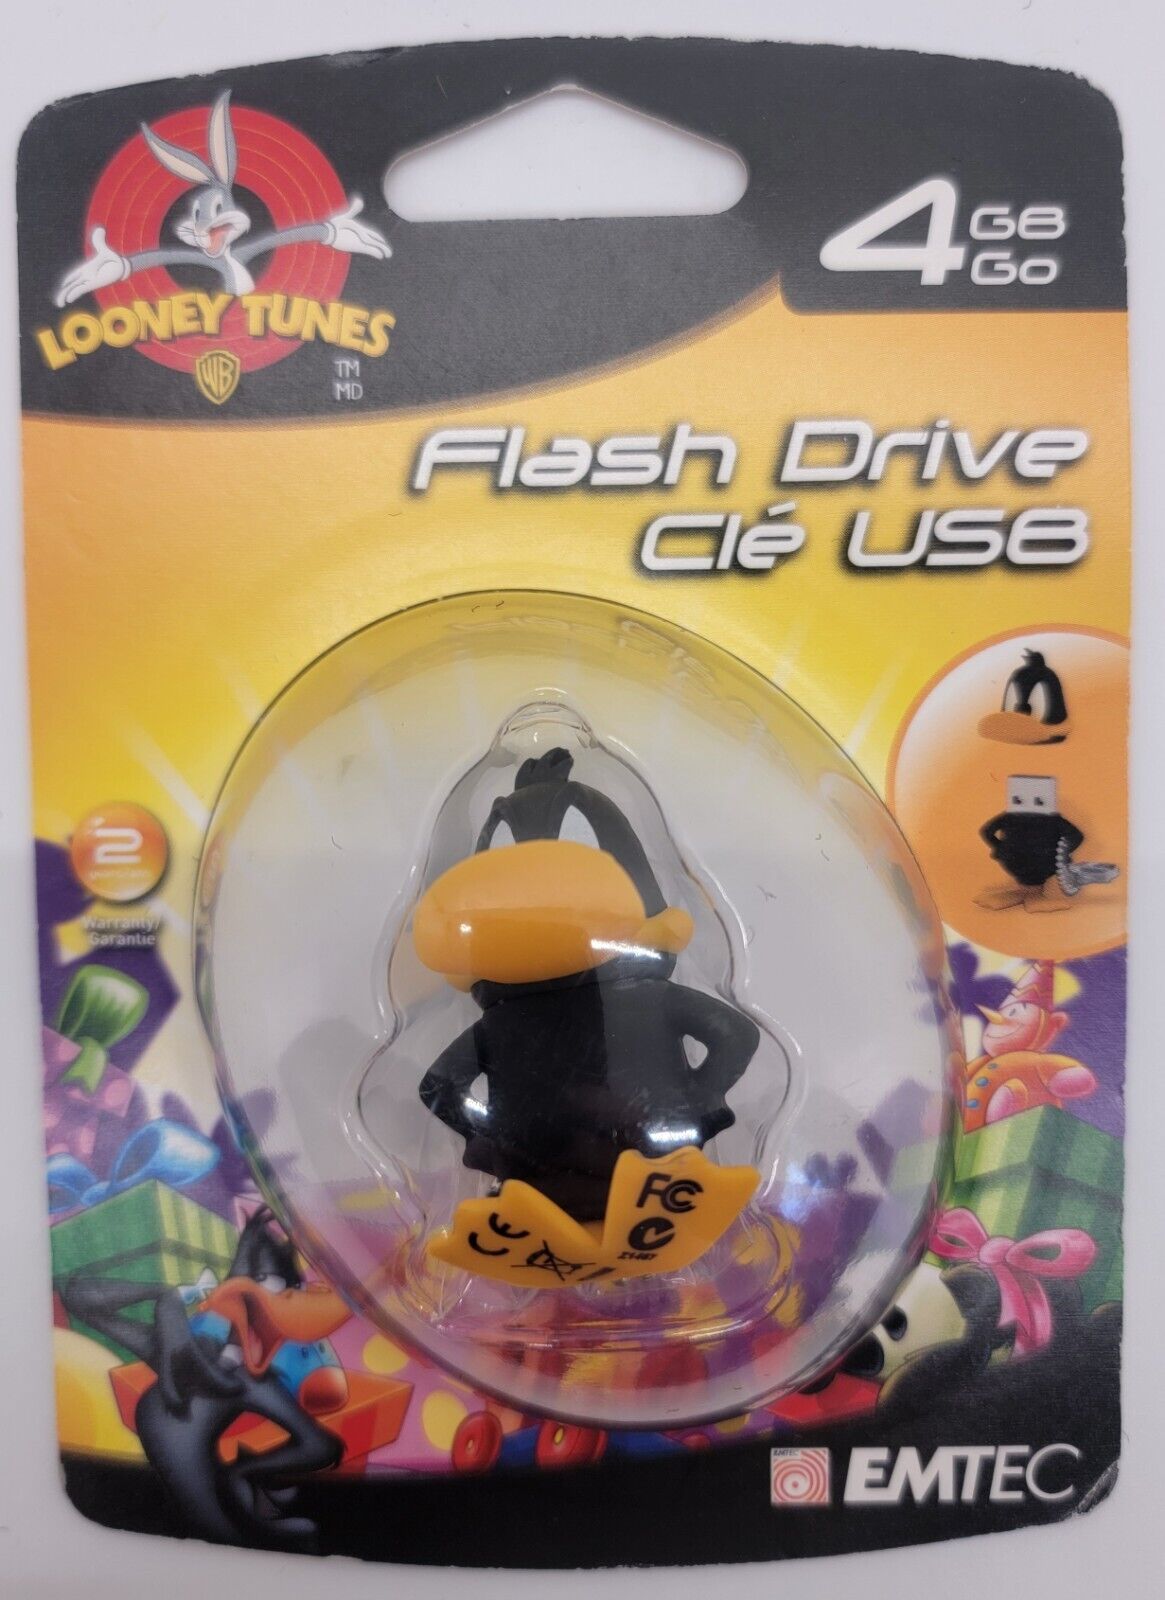 Looney Tunes 4GB Flash Drive - New Sealed USB 2.0 - Donald Duck 